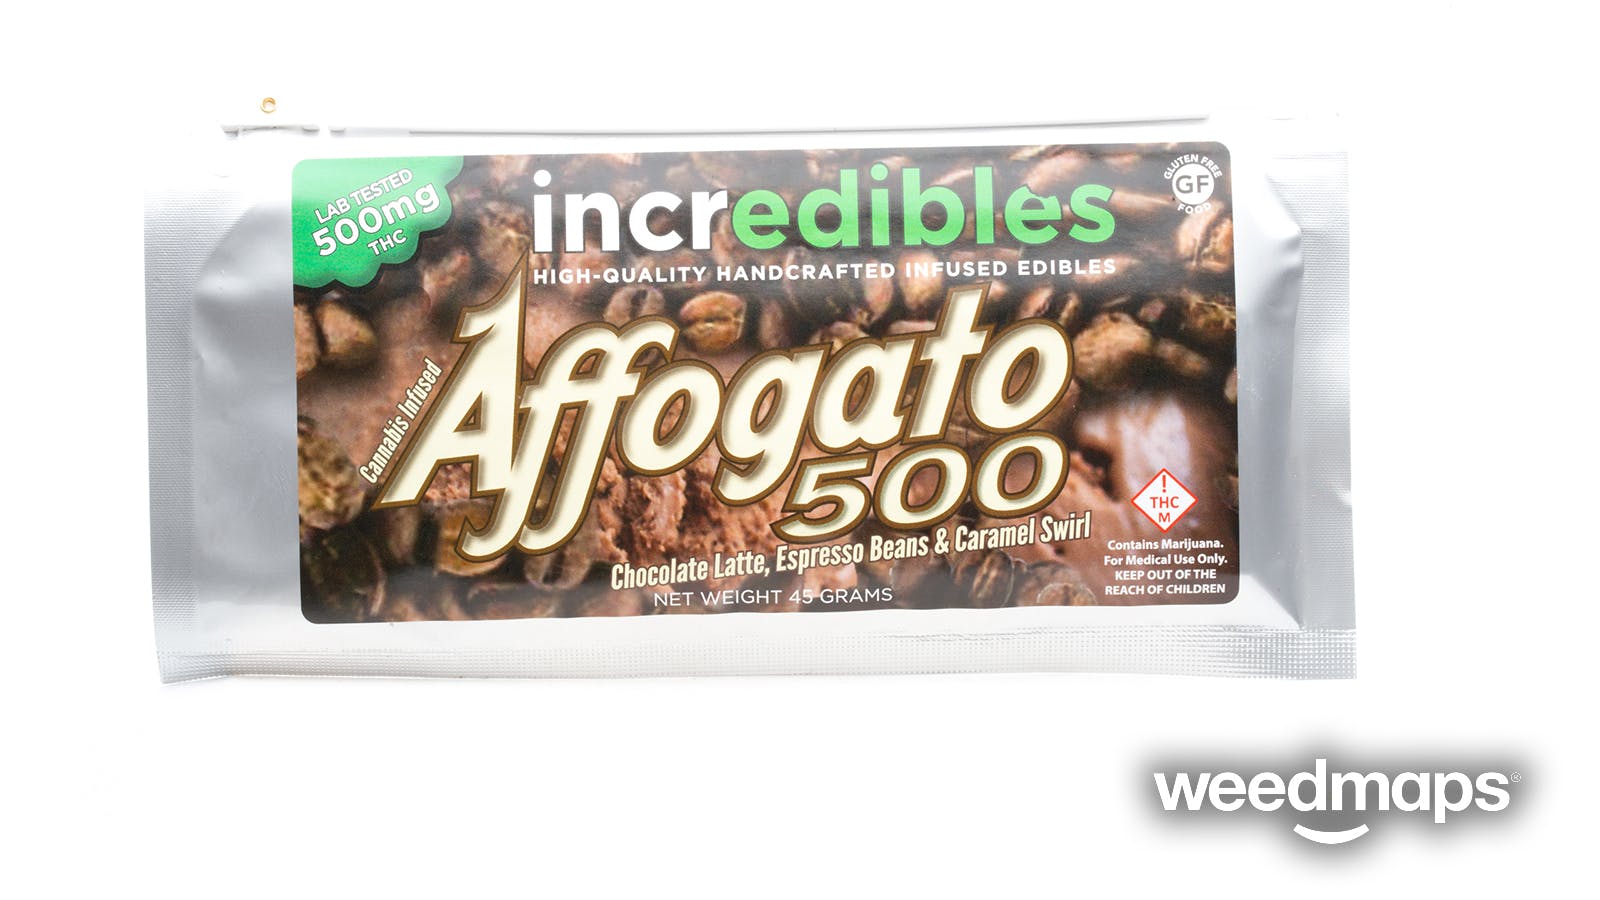 edible-incredibles-affogato-bar-300mg